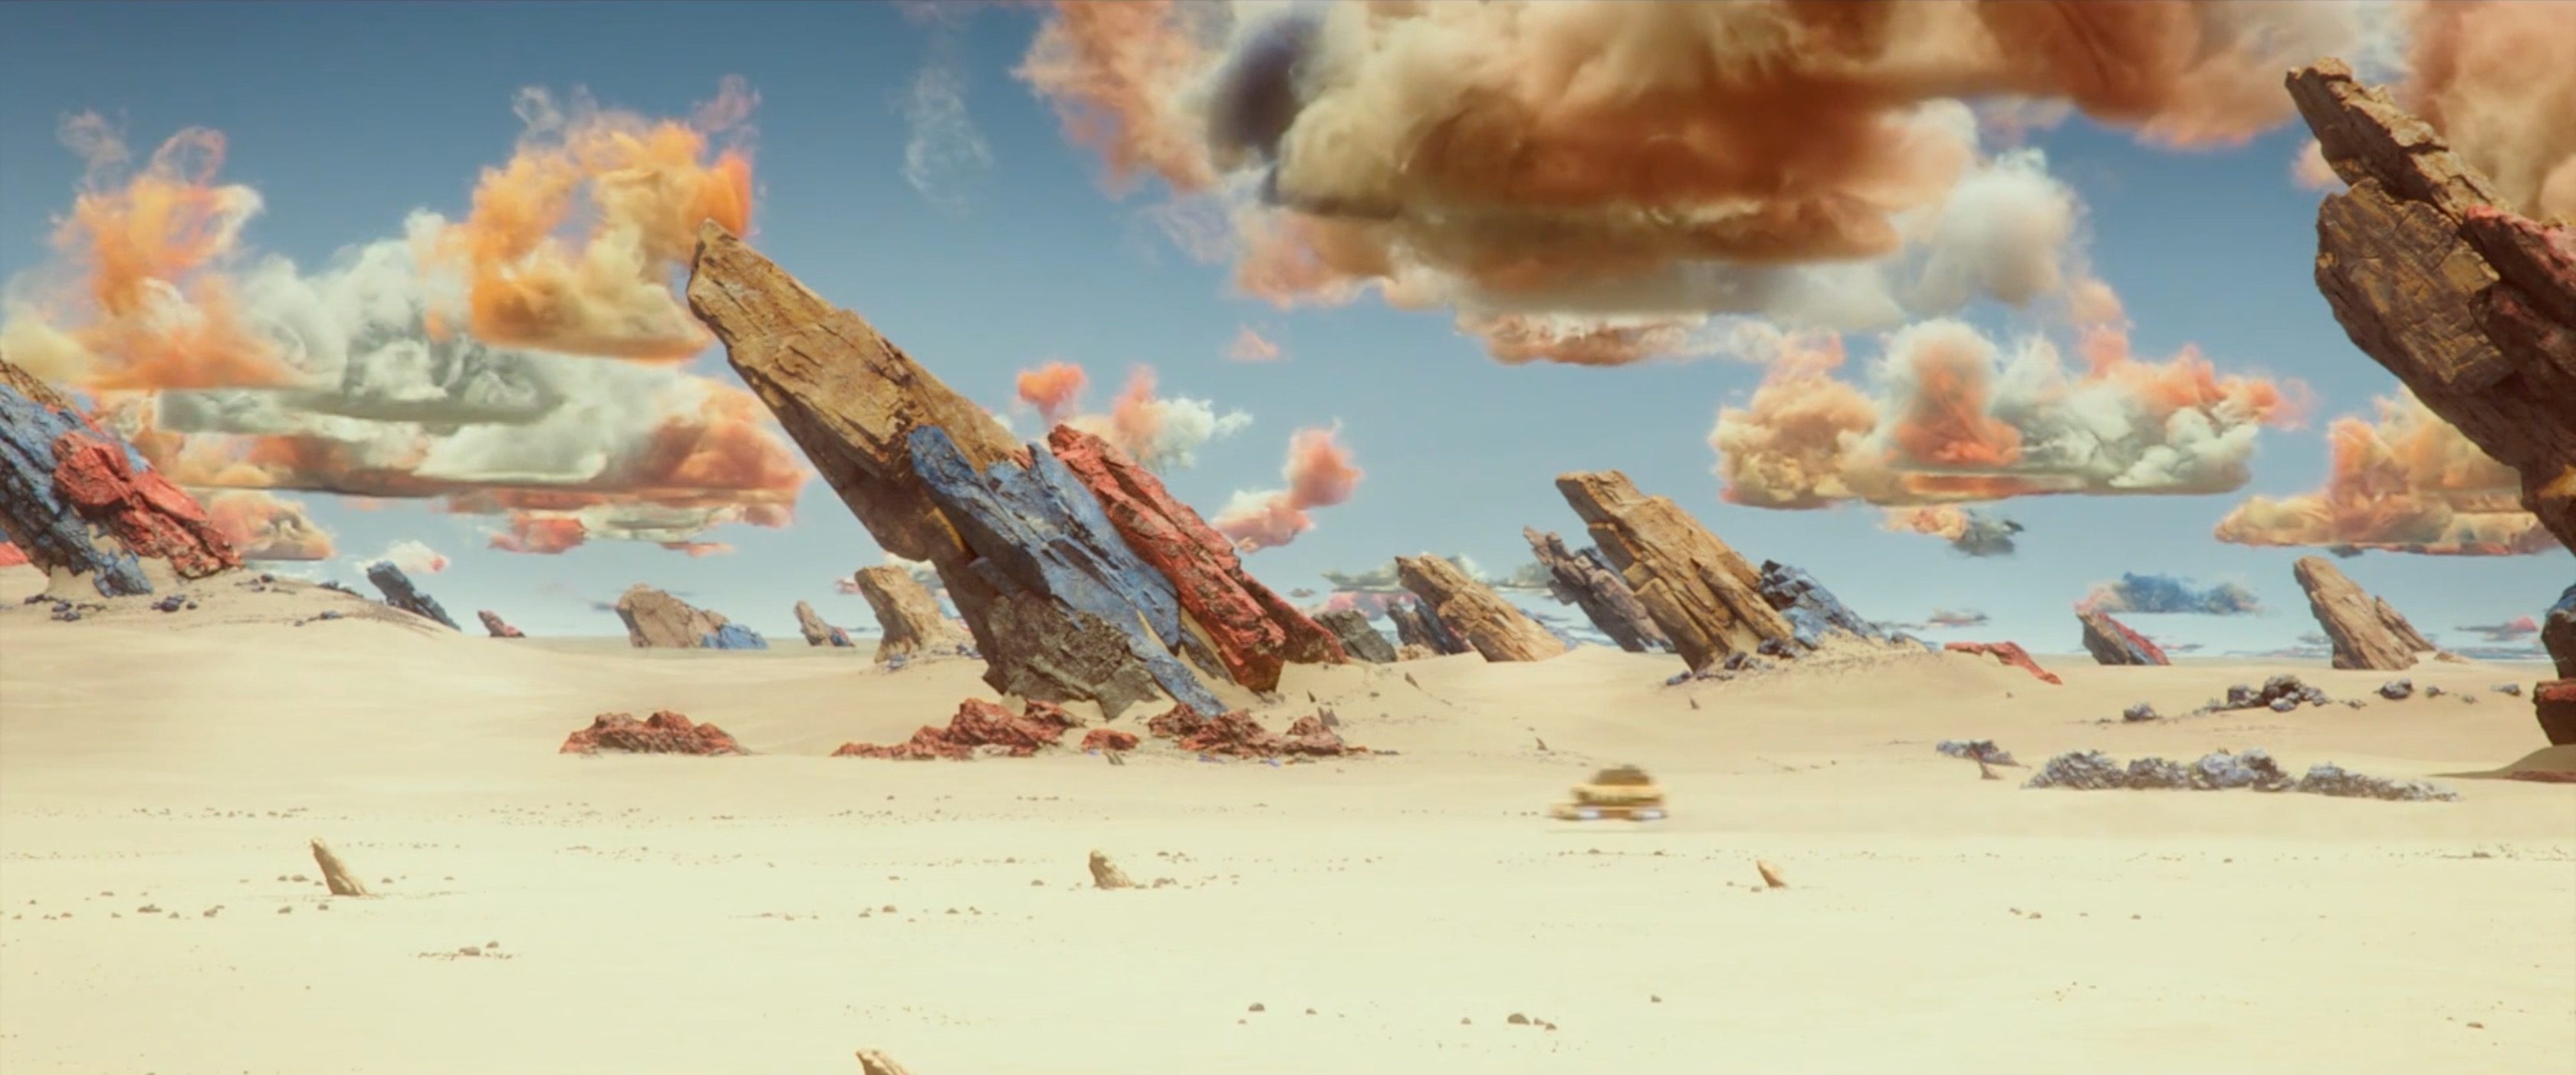 Valerian movie promo, Luc Besson film, Captivating story, Science fiction, 3360x1410 Dual Screen Desktop